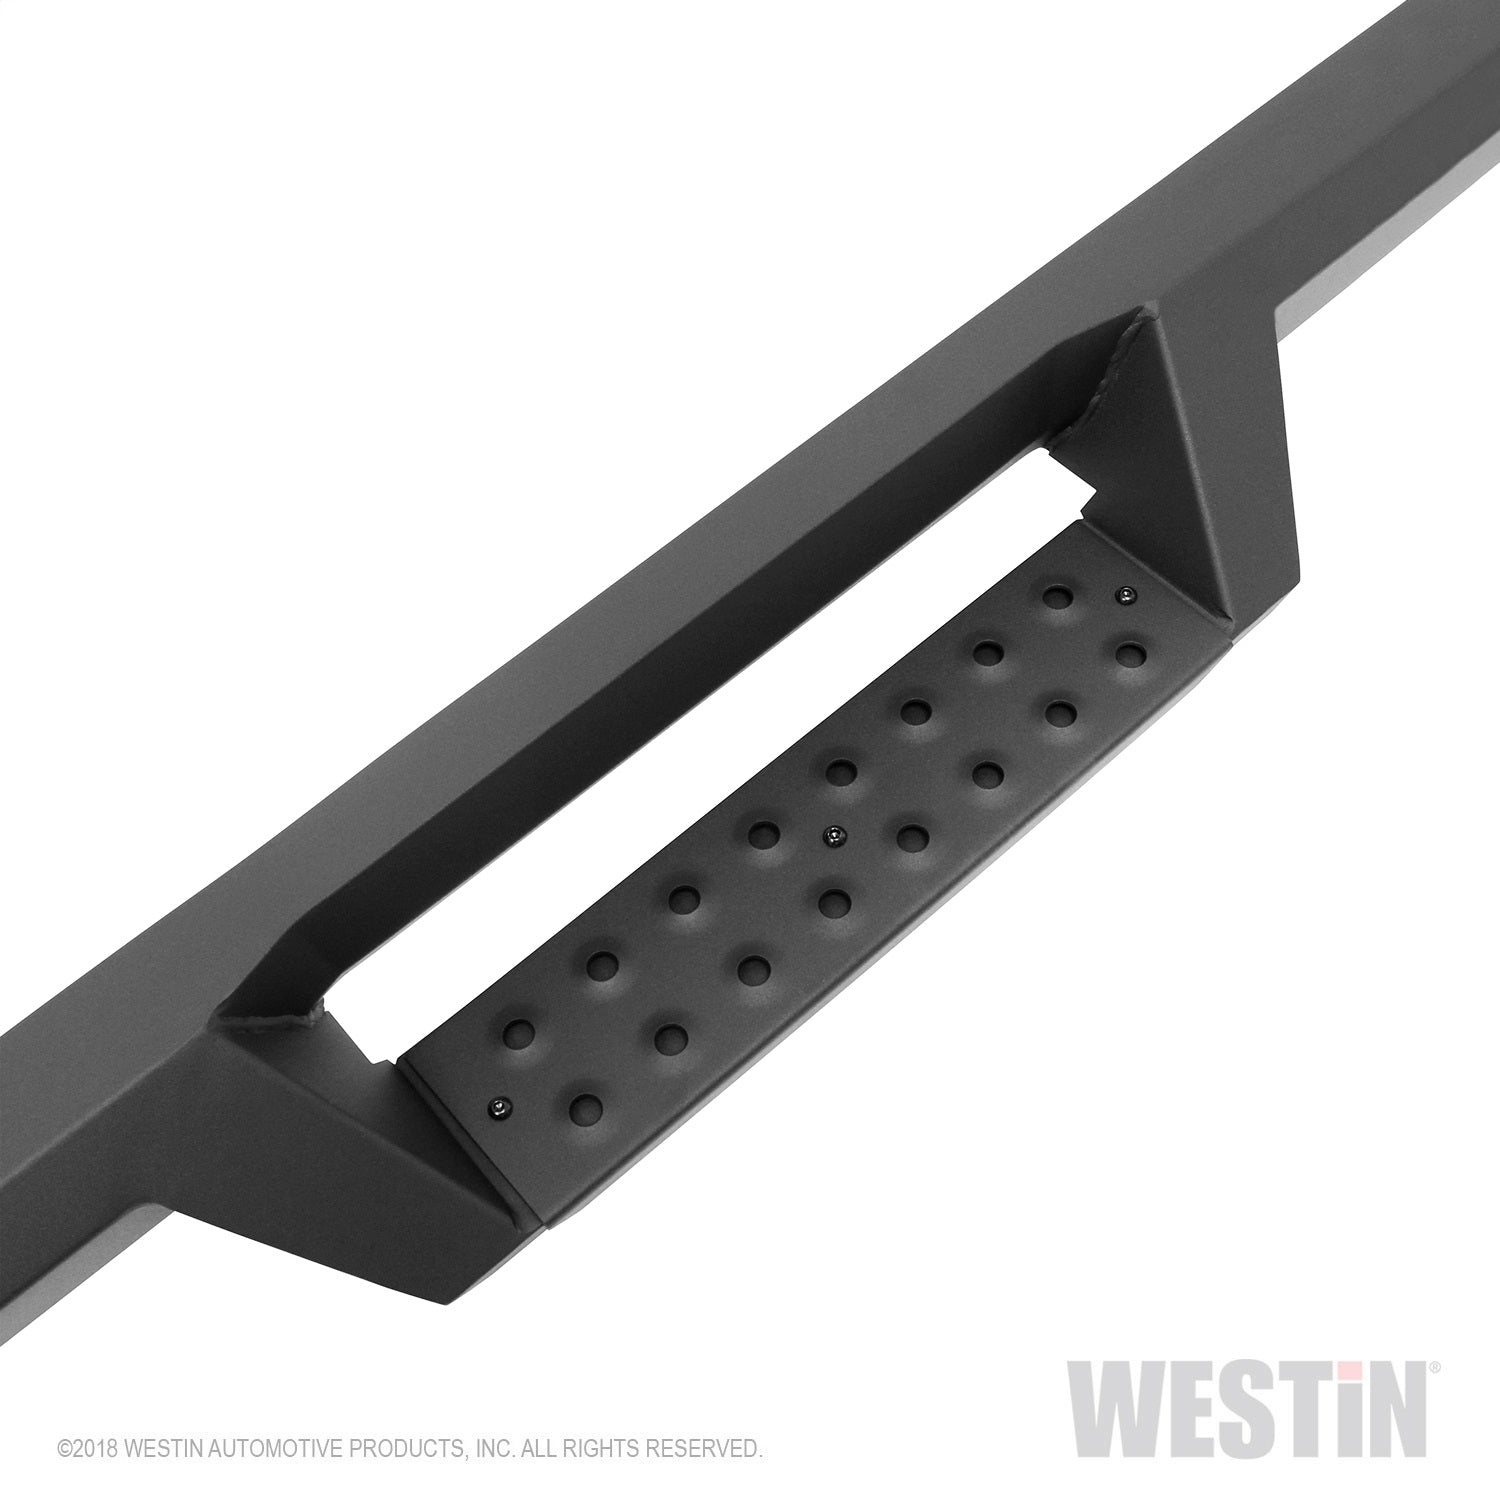 Westin 56-534685 HDX Drop Wheel to Wheel Nerf Step Bars